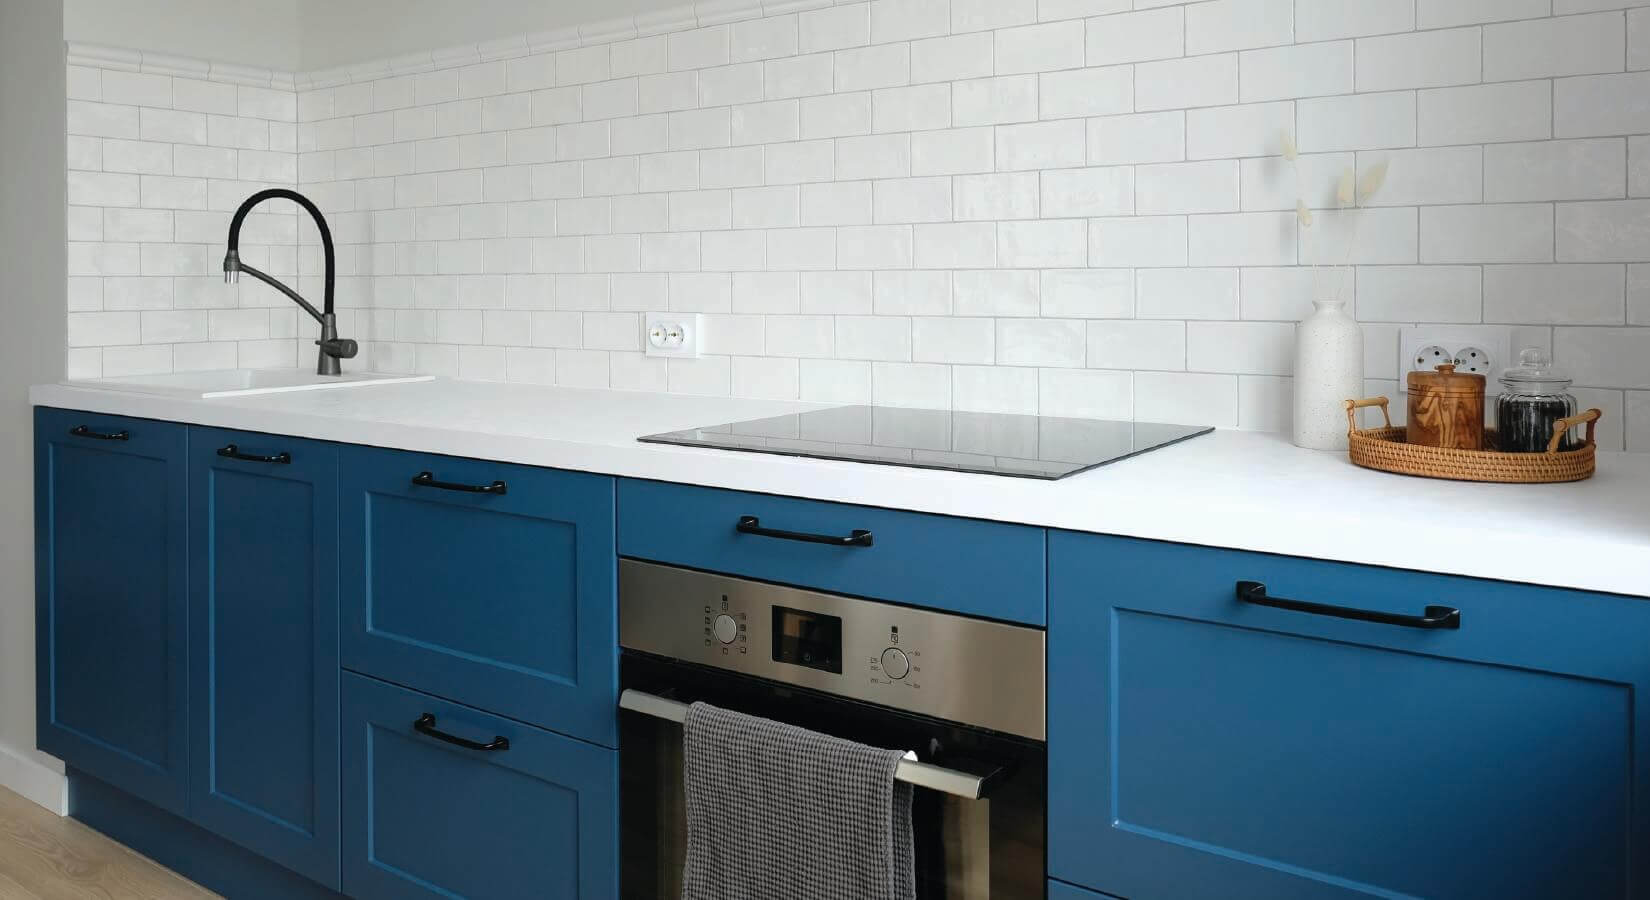 Kitchen with dark blue shaker cabinets, white countertop, and white tile backsplash.